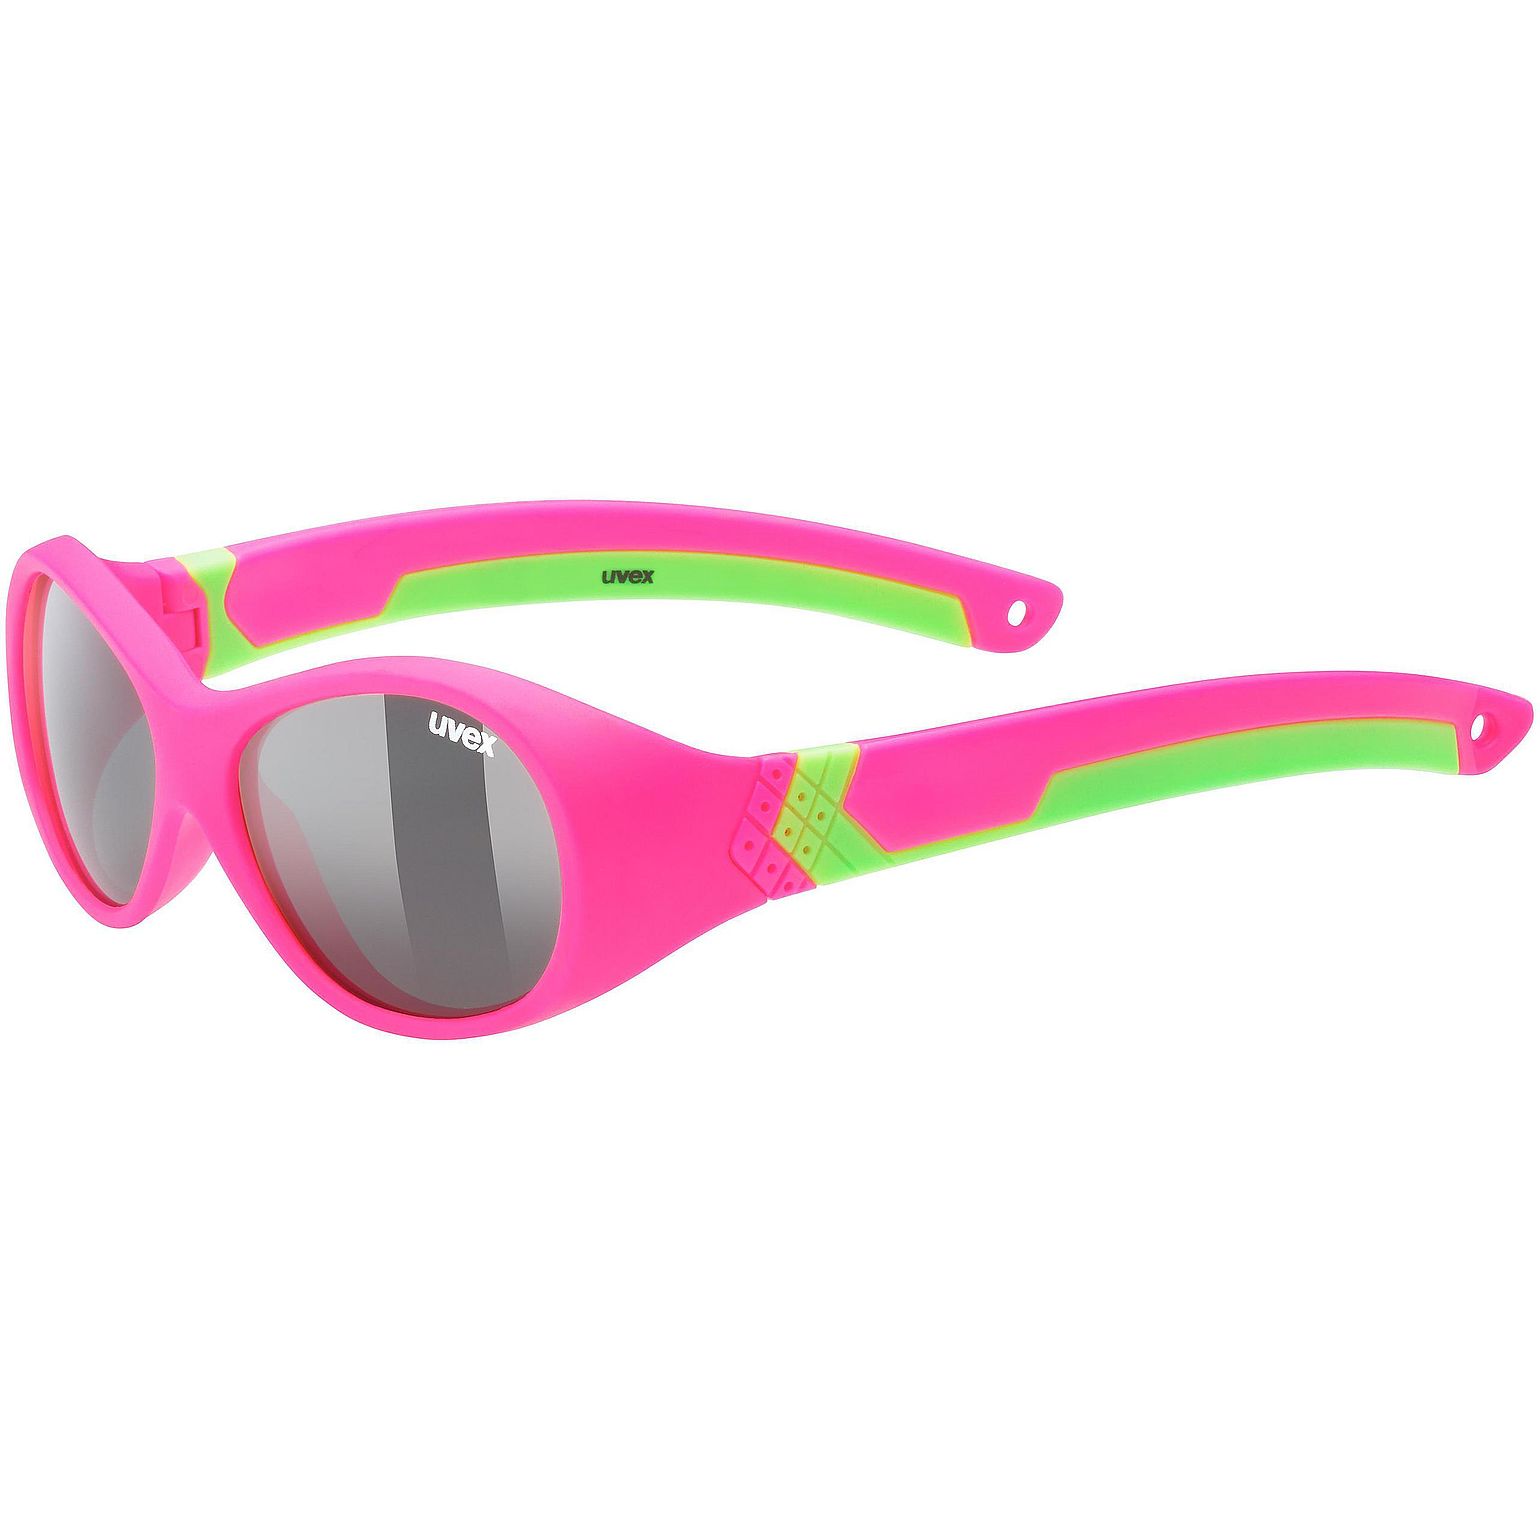 Kinder-Sonnenbrille sportstyle 510, pink/green